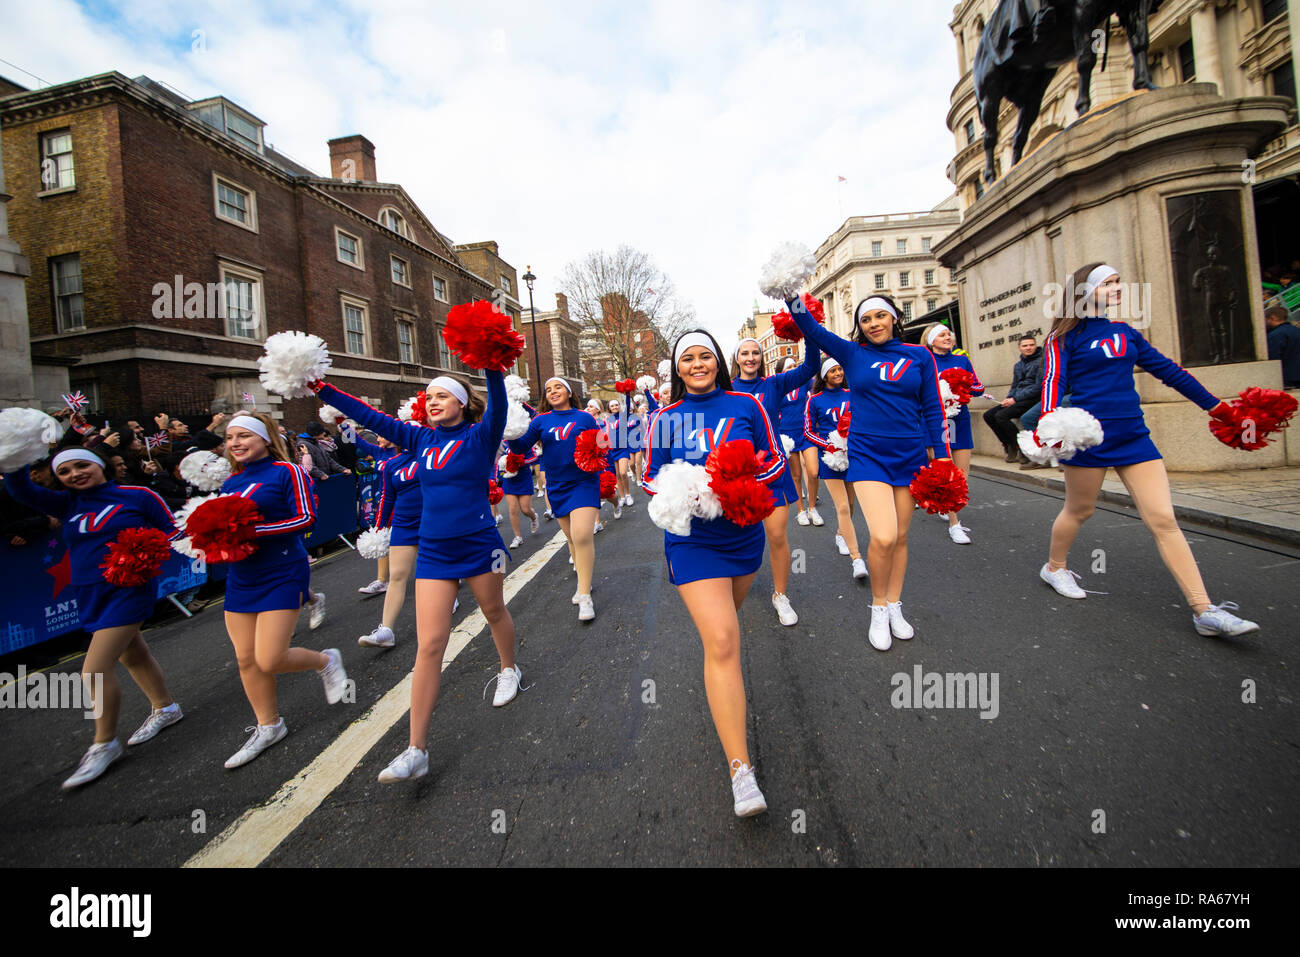 Varsity Spirit All American Cheerleaders at London's New Year's Day Parade, UK. Girl, female cheerleader performing. London 2019 Stock Photo